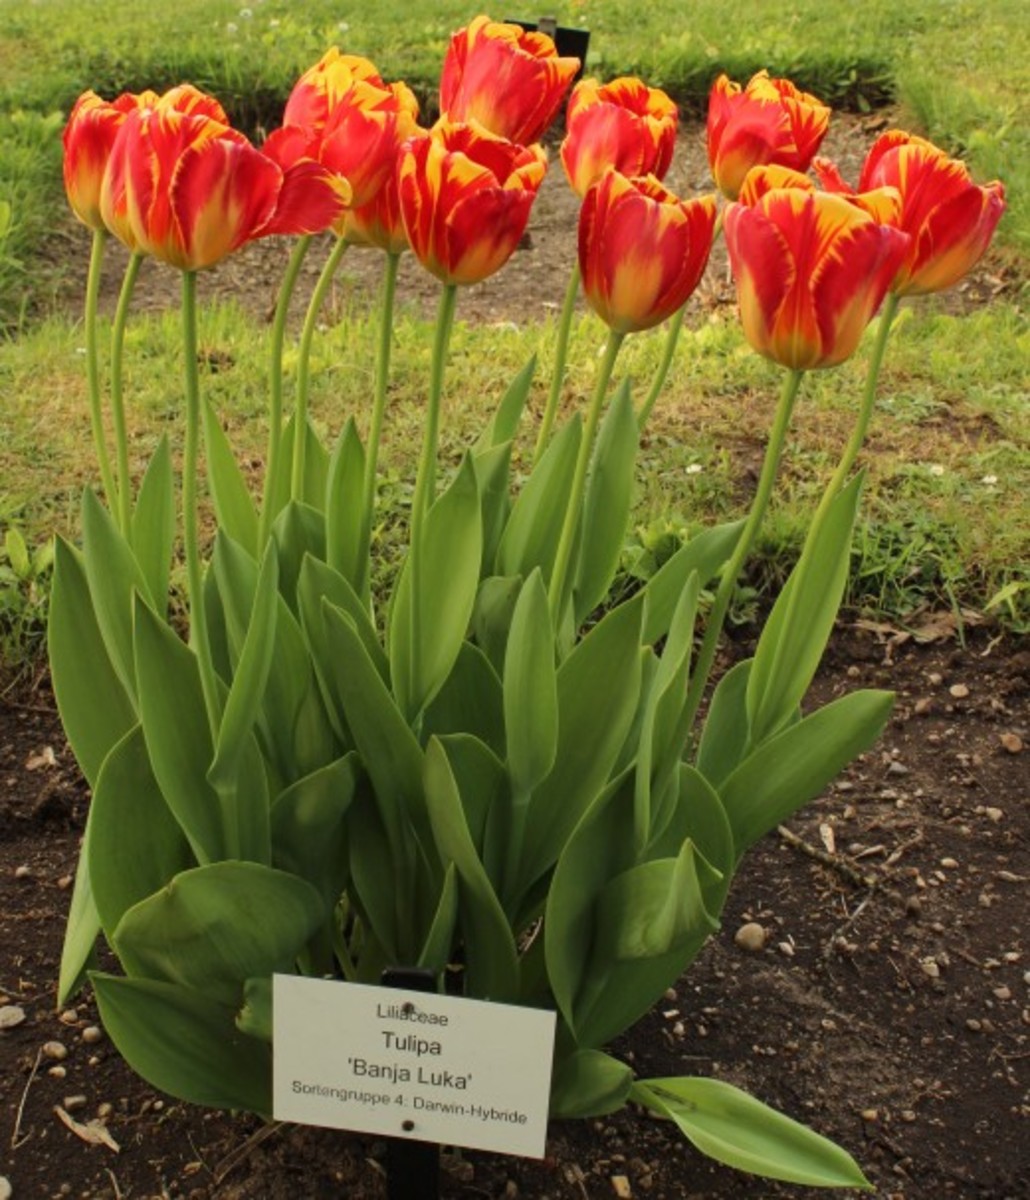 Darwin hybrid tulips.